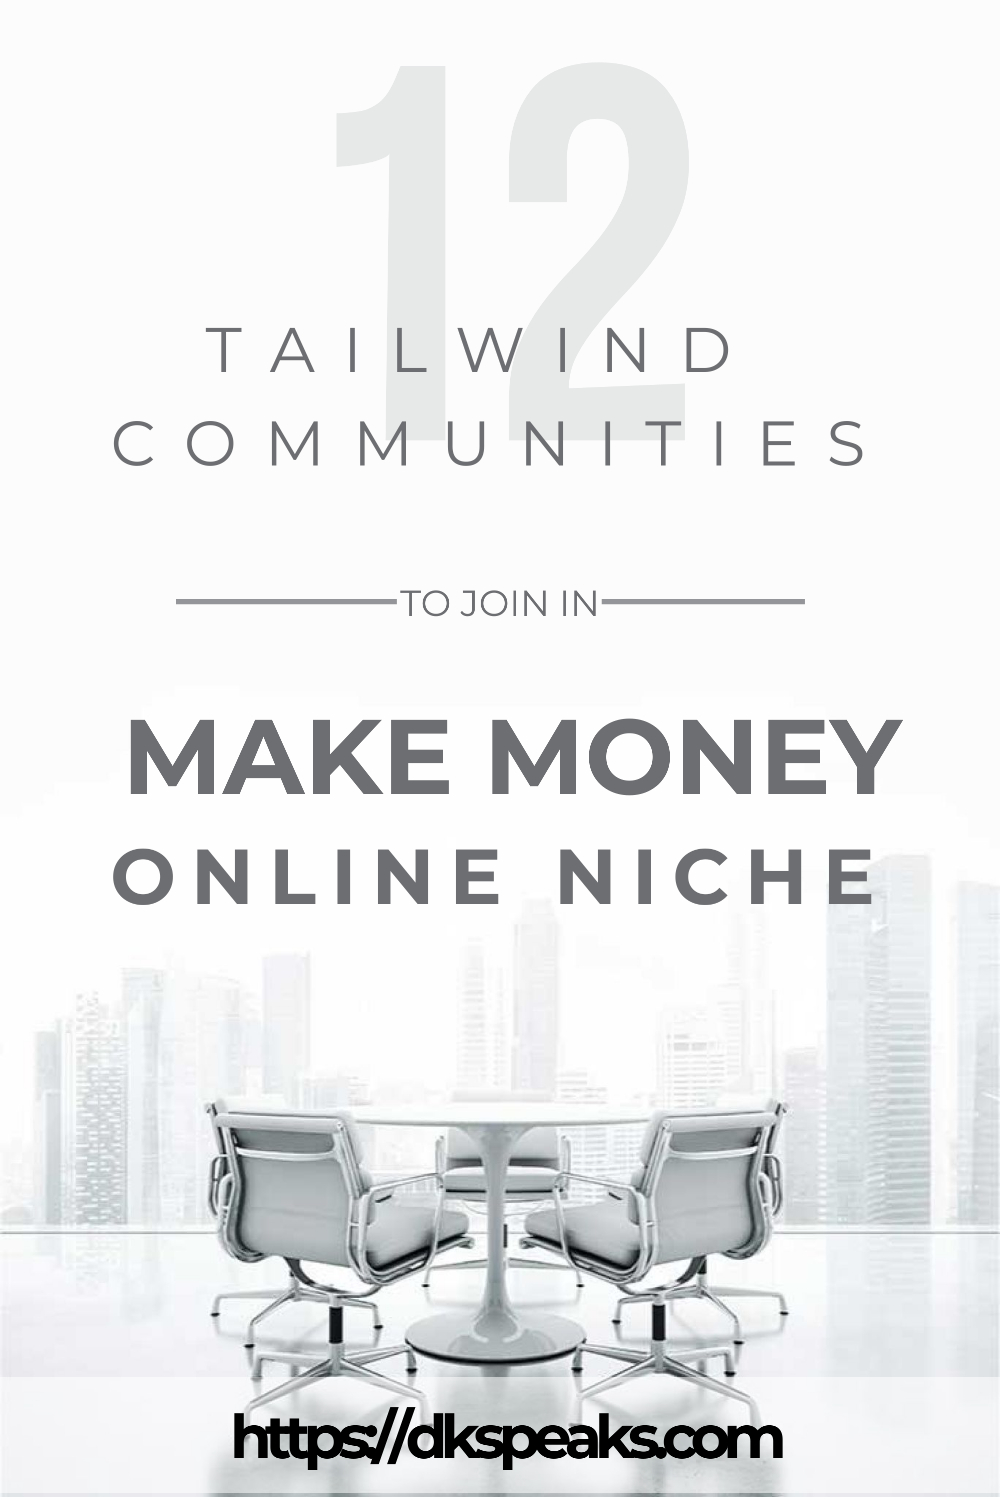 tailwind communities